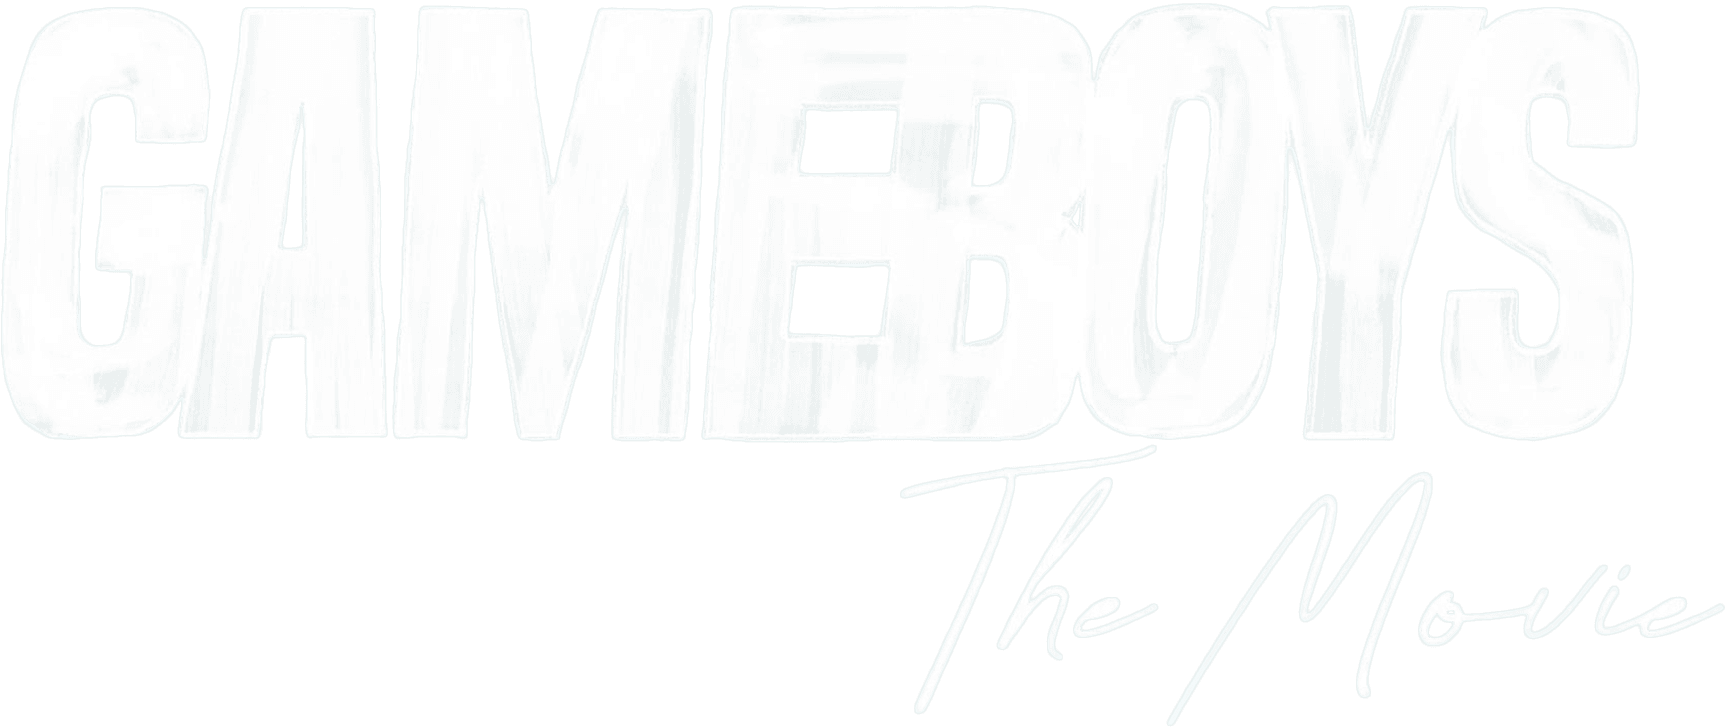 Gameboys: The Movie logo